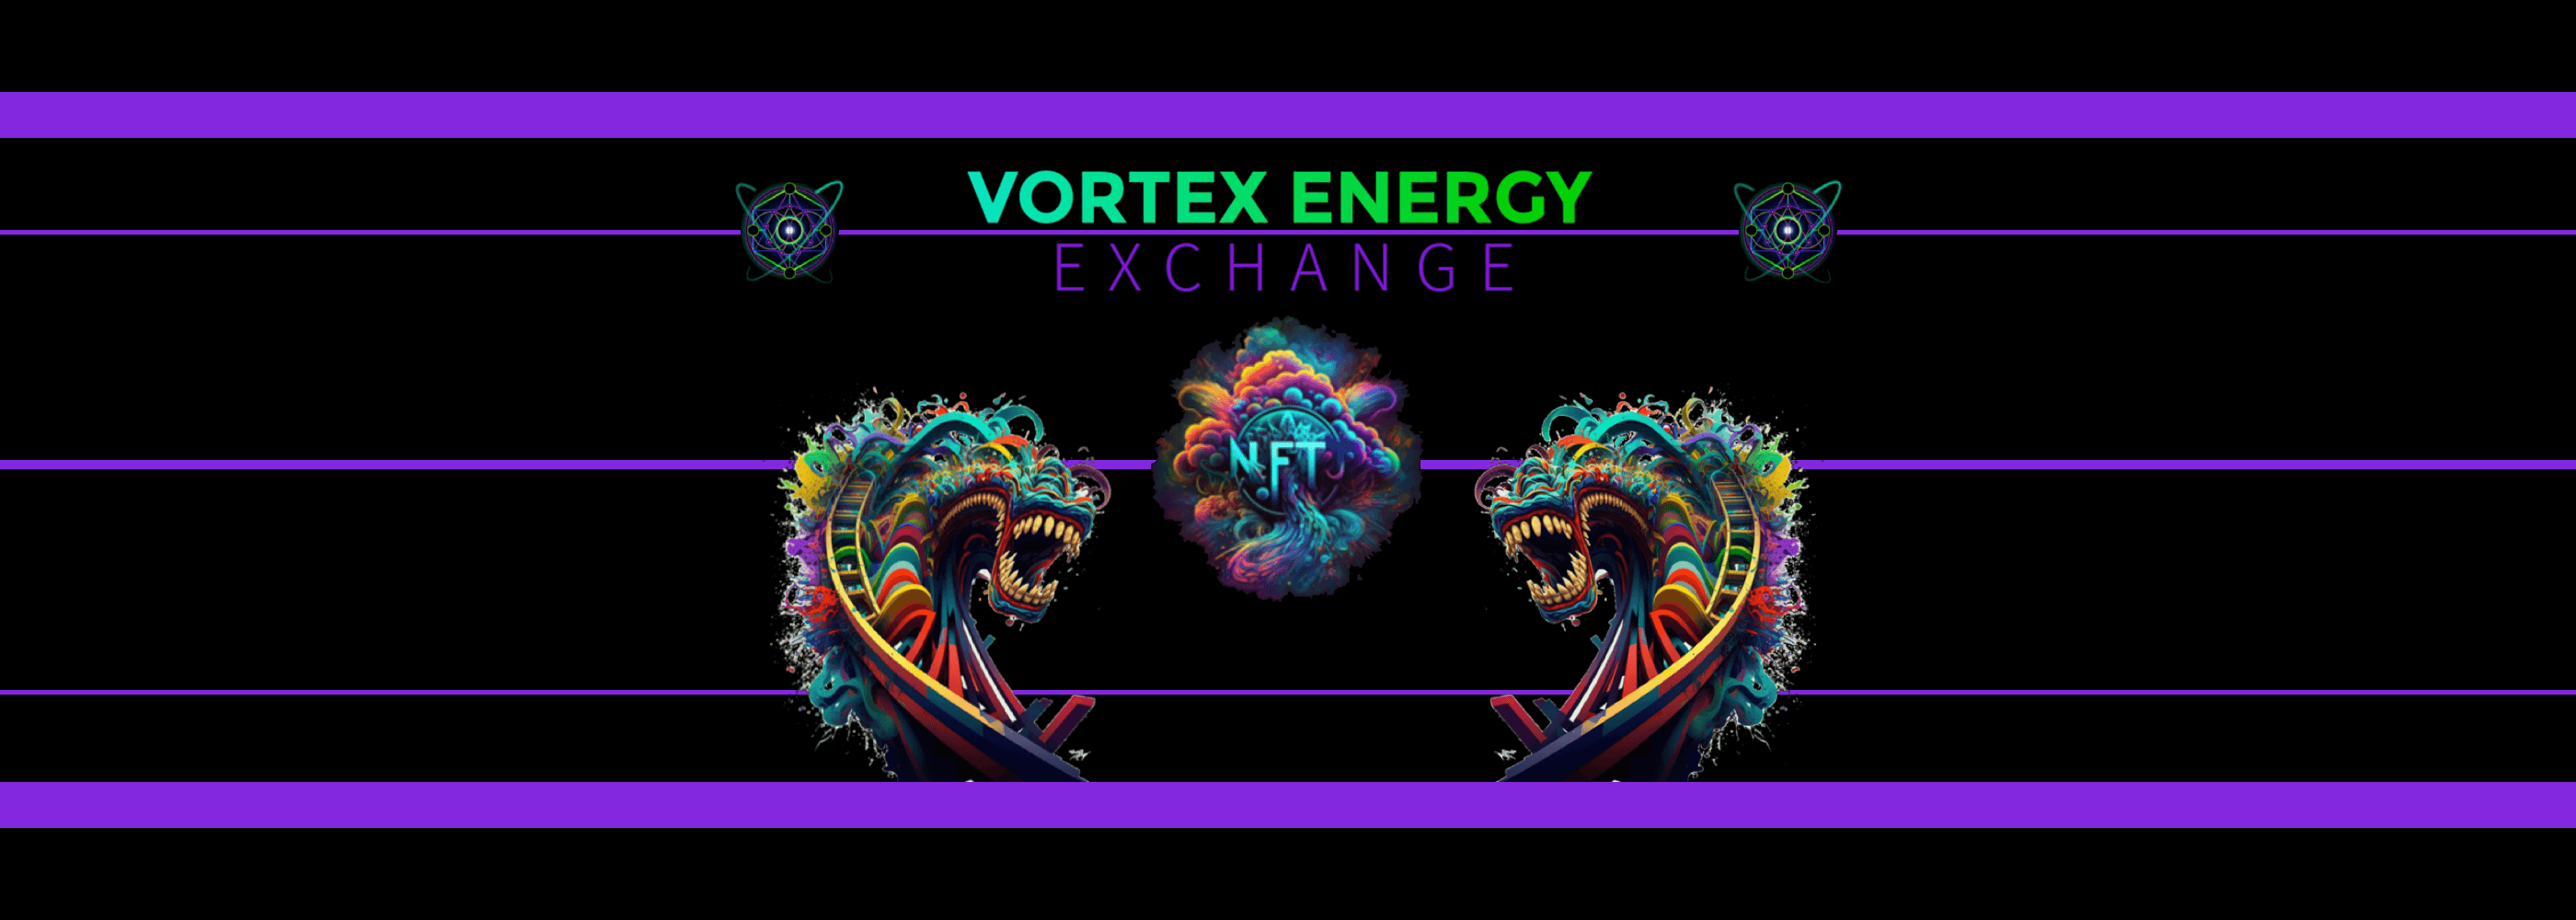 Vortex_Energy_Exchange bannière